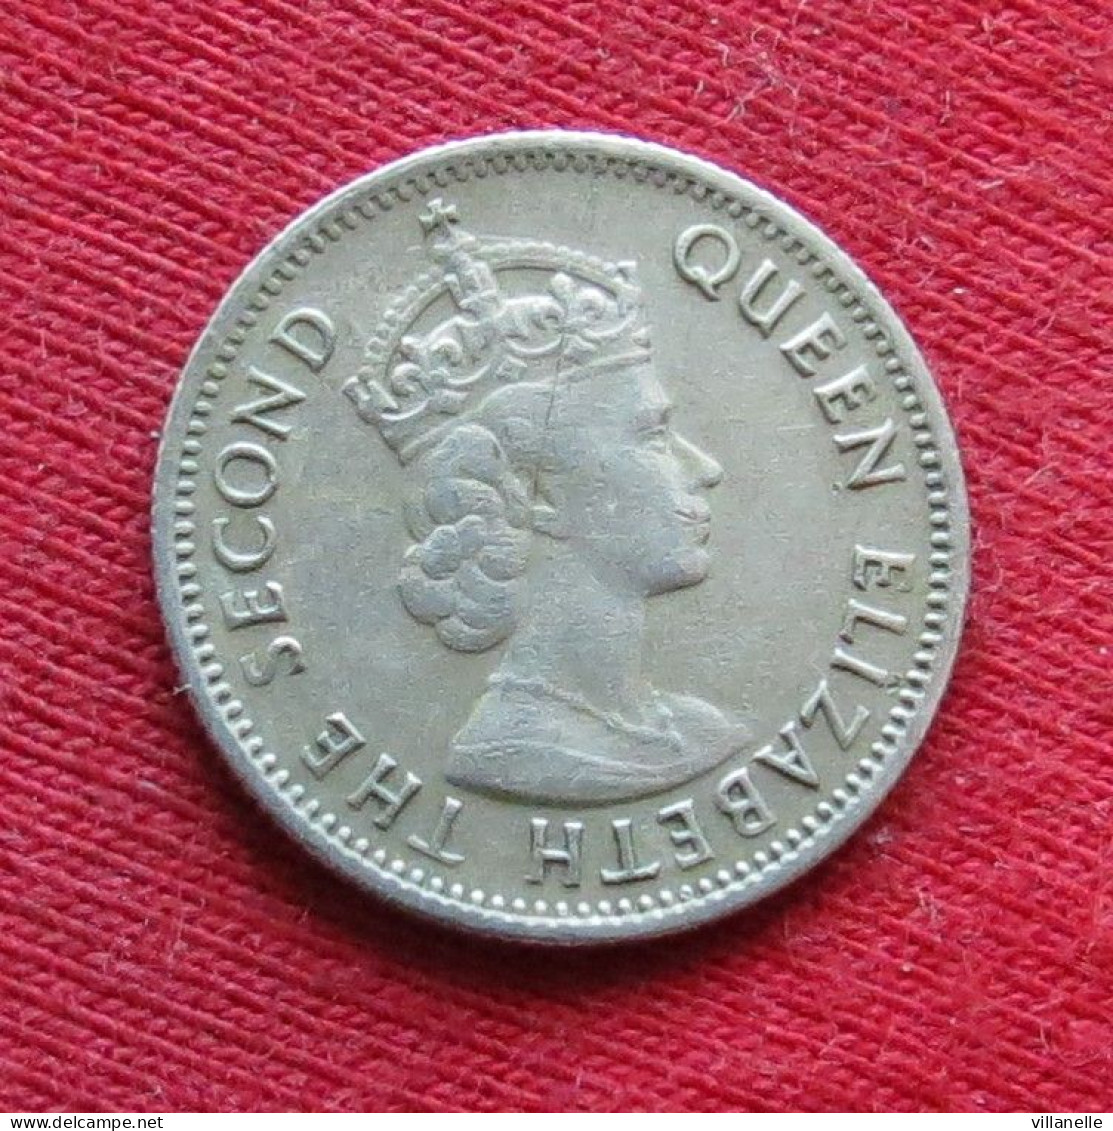 Malaya And British Borneo 5 Cents 1958 W ºº - Malaysia